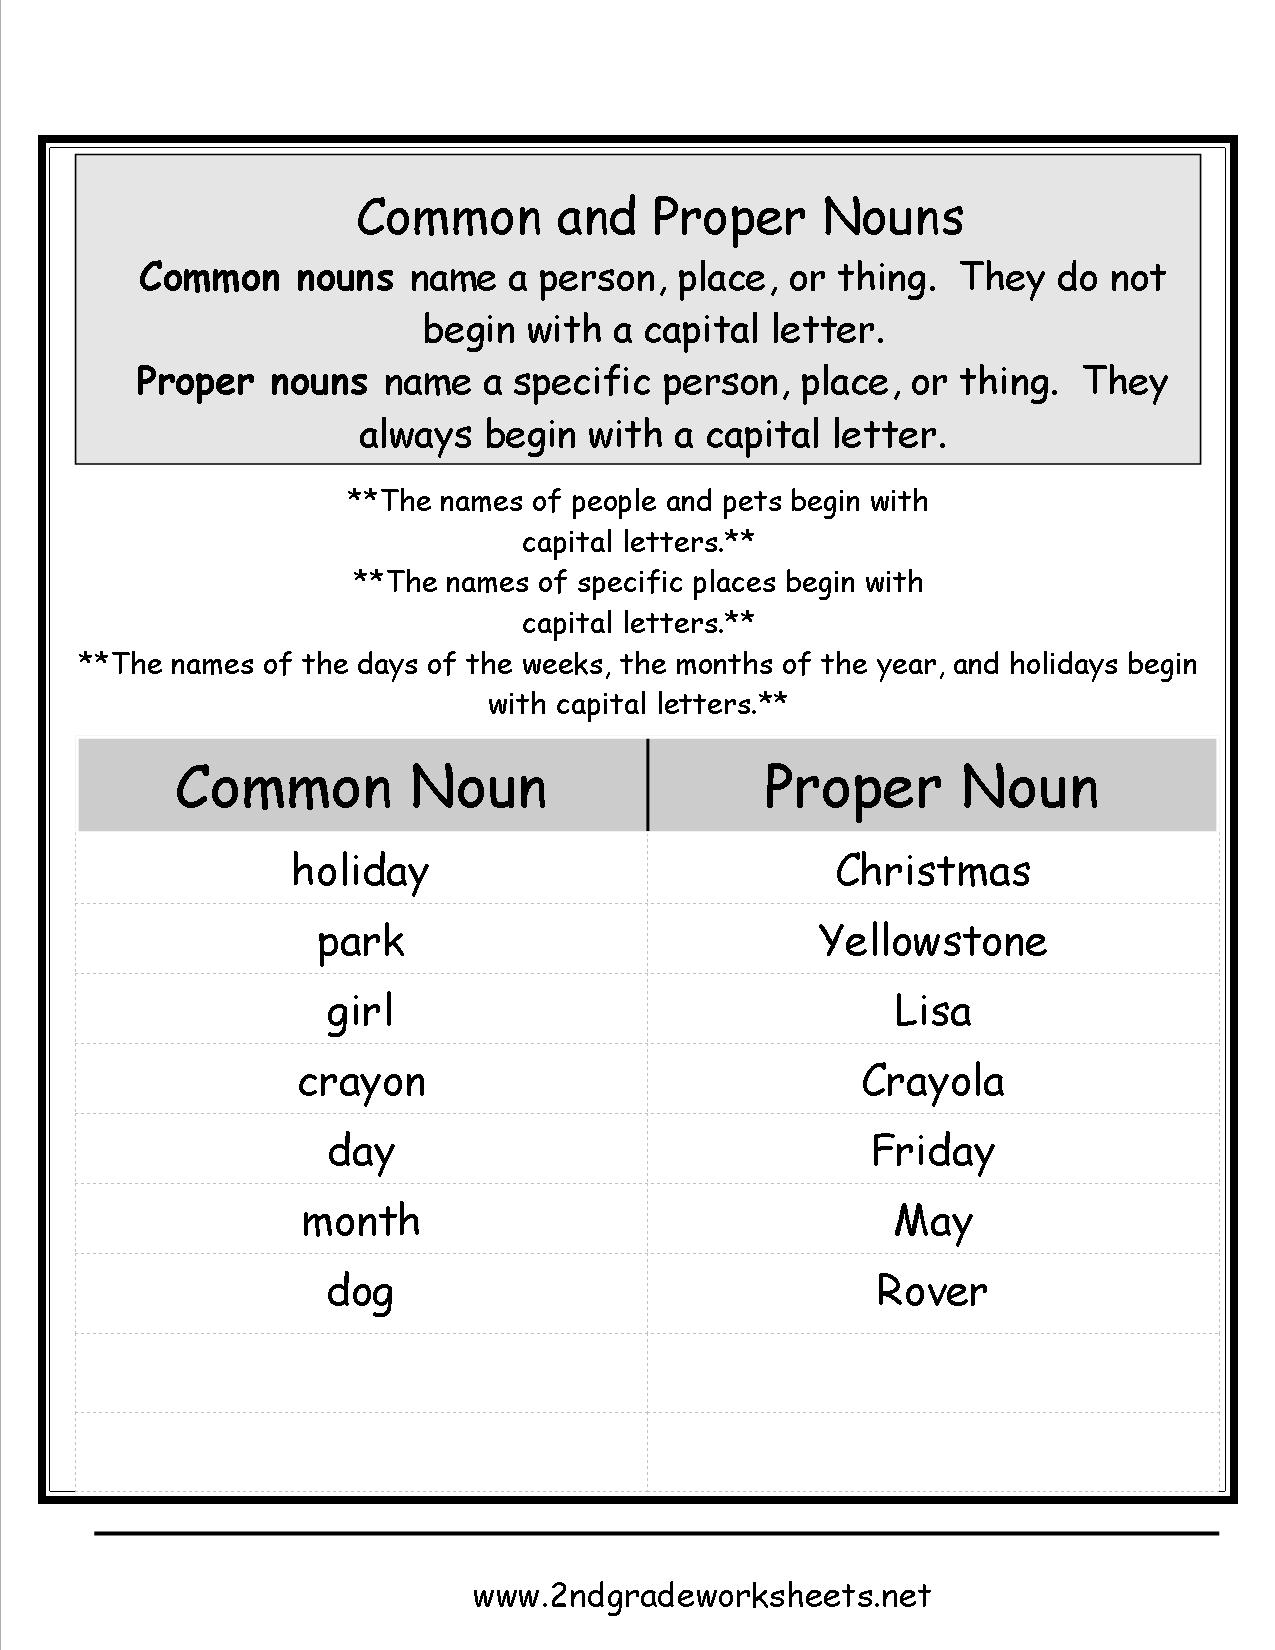 Giving Of Proper Noun To Common Noun Worksheet Grade 2